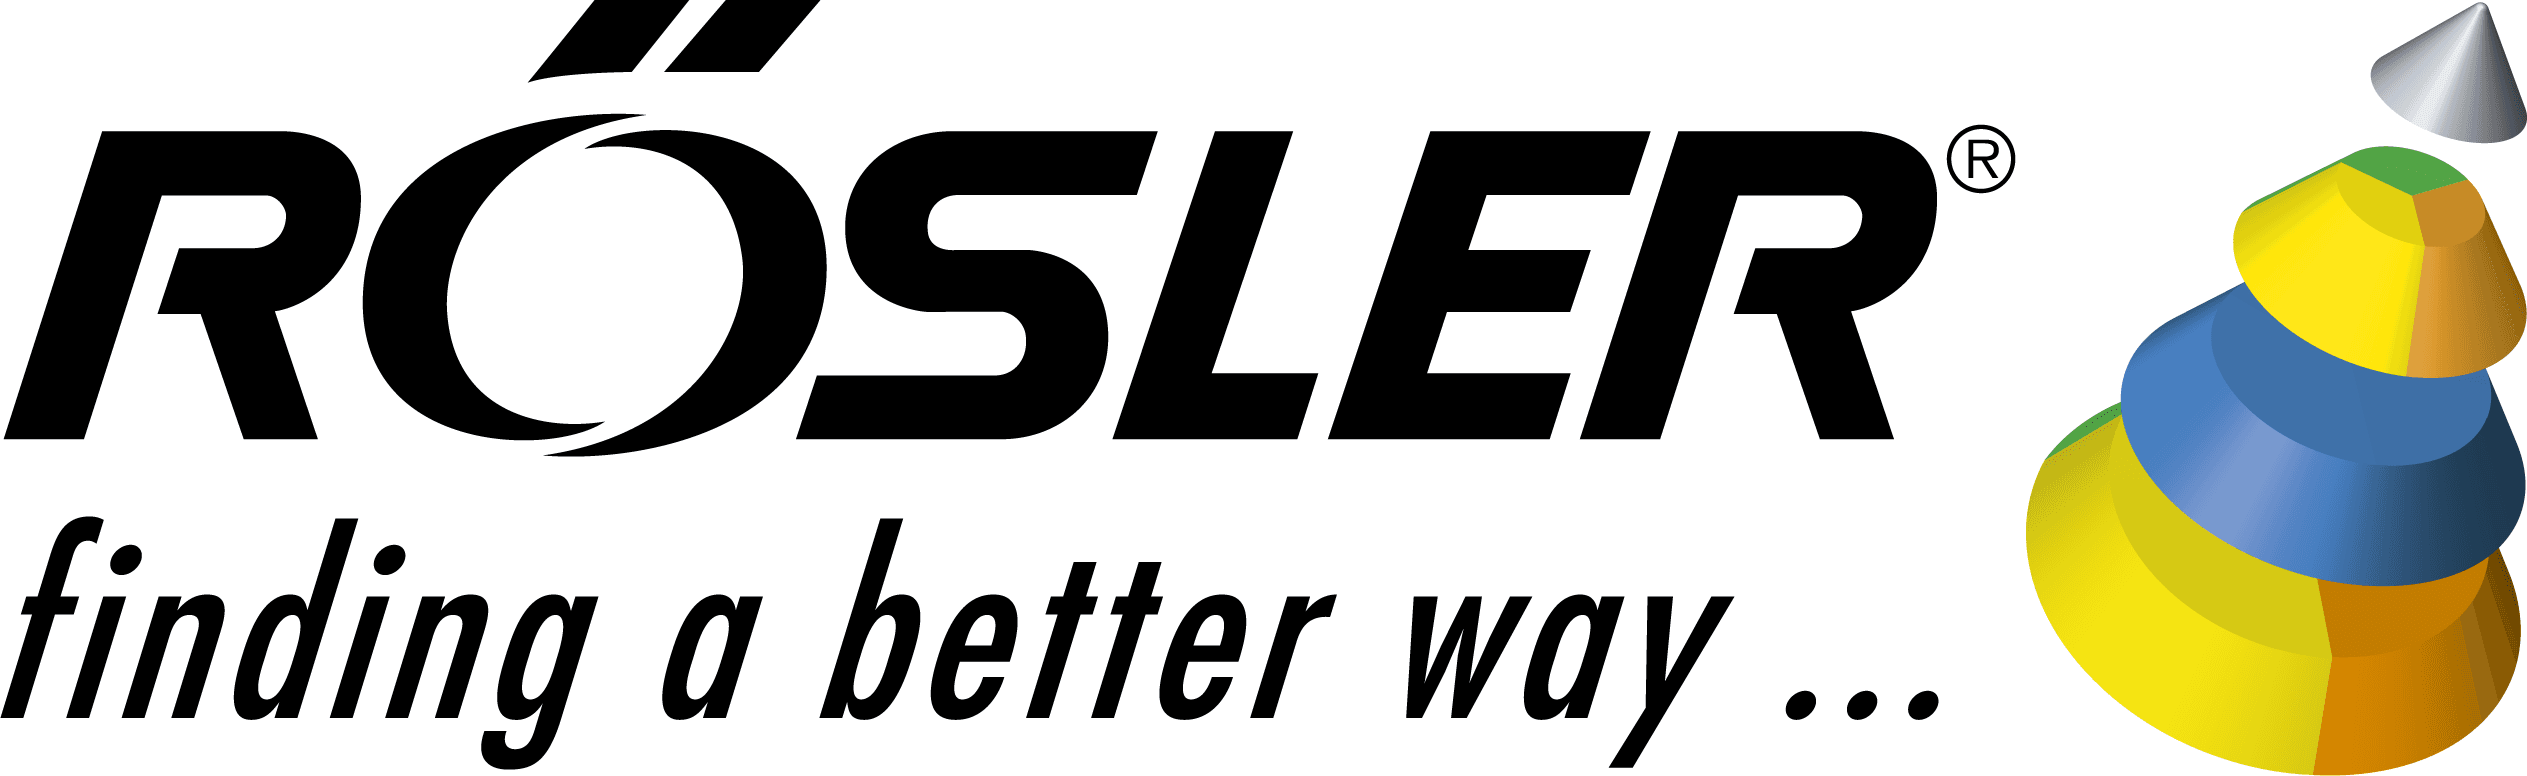 Logo Rösler Oberflächentechnik GmbH